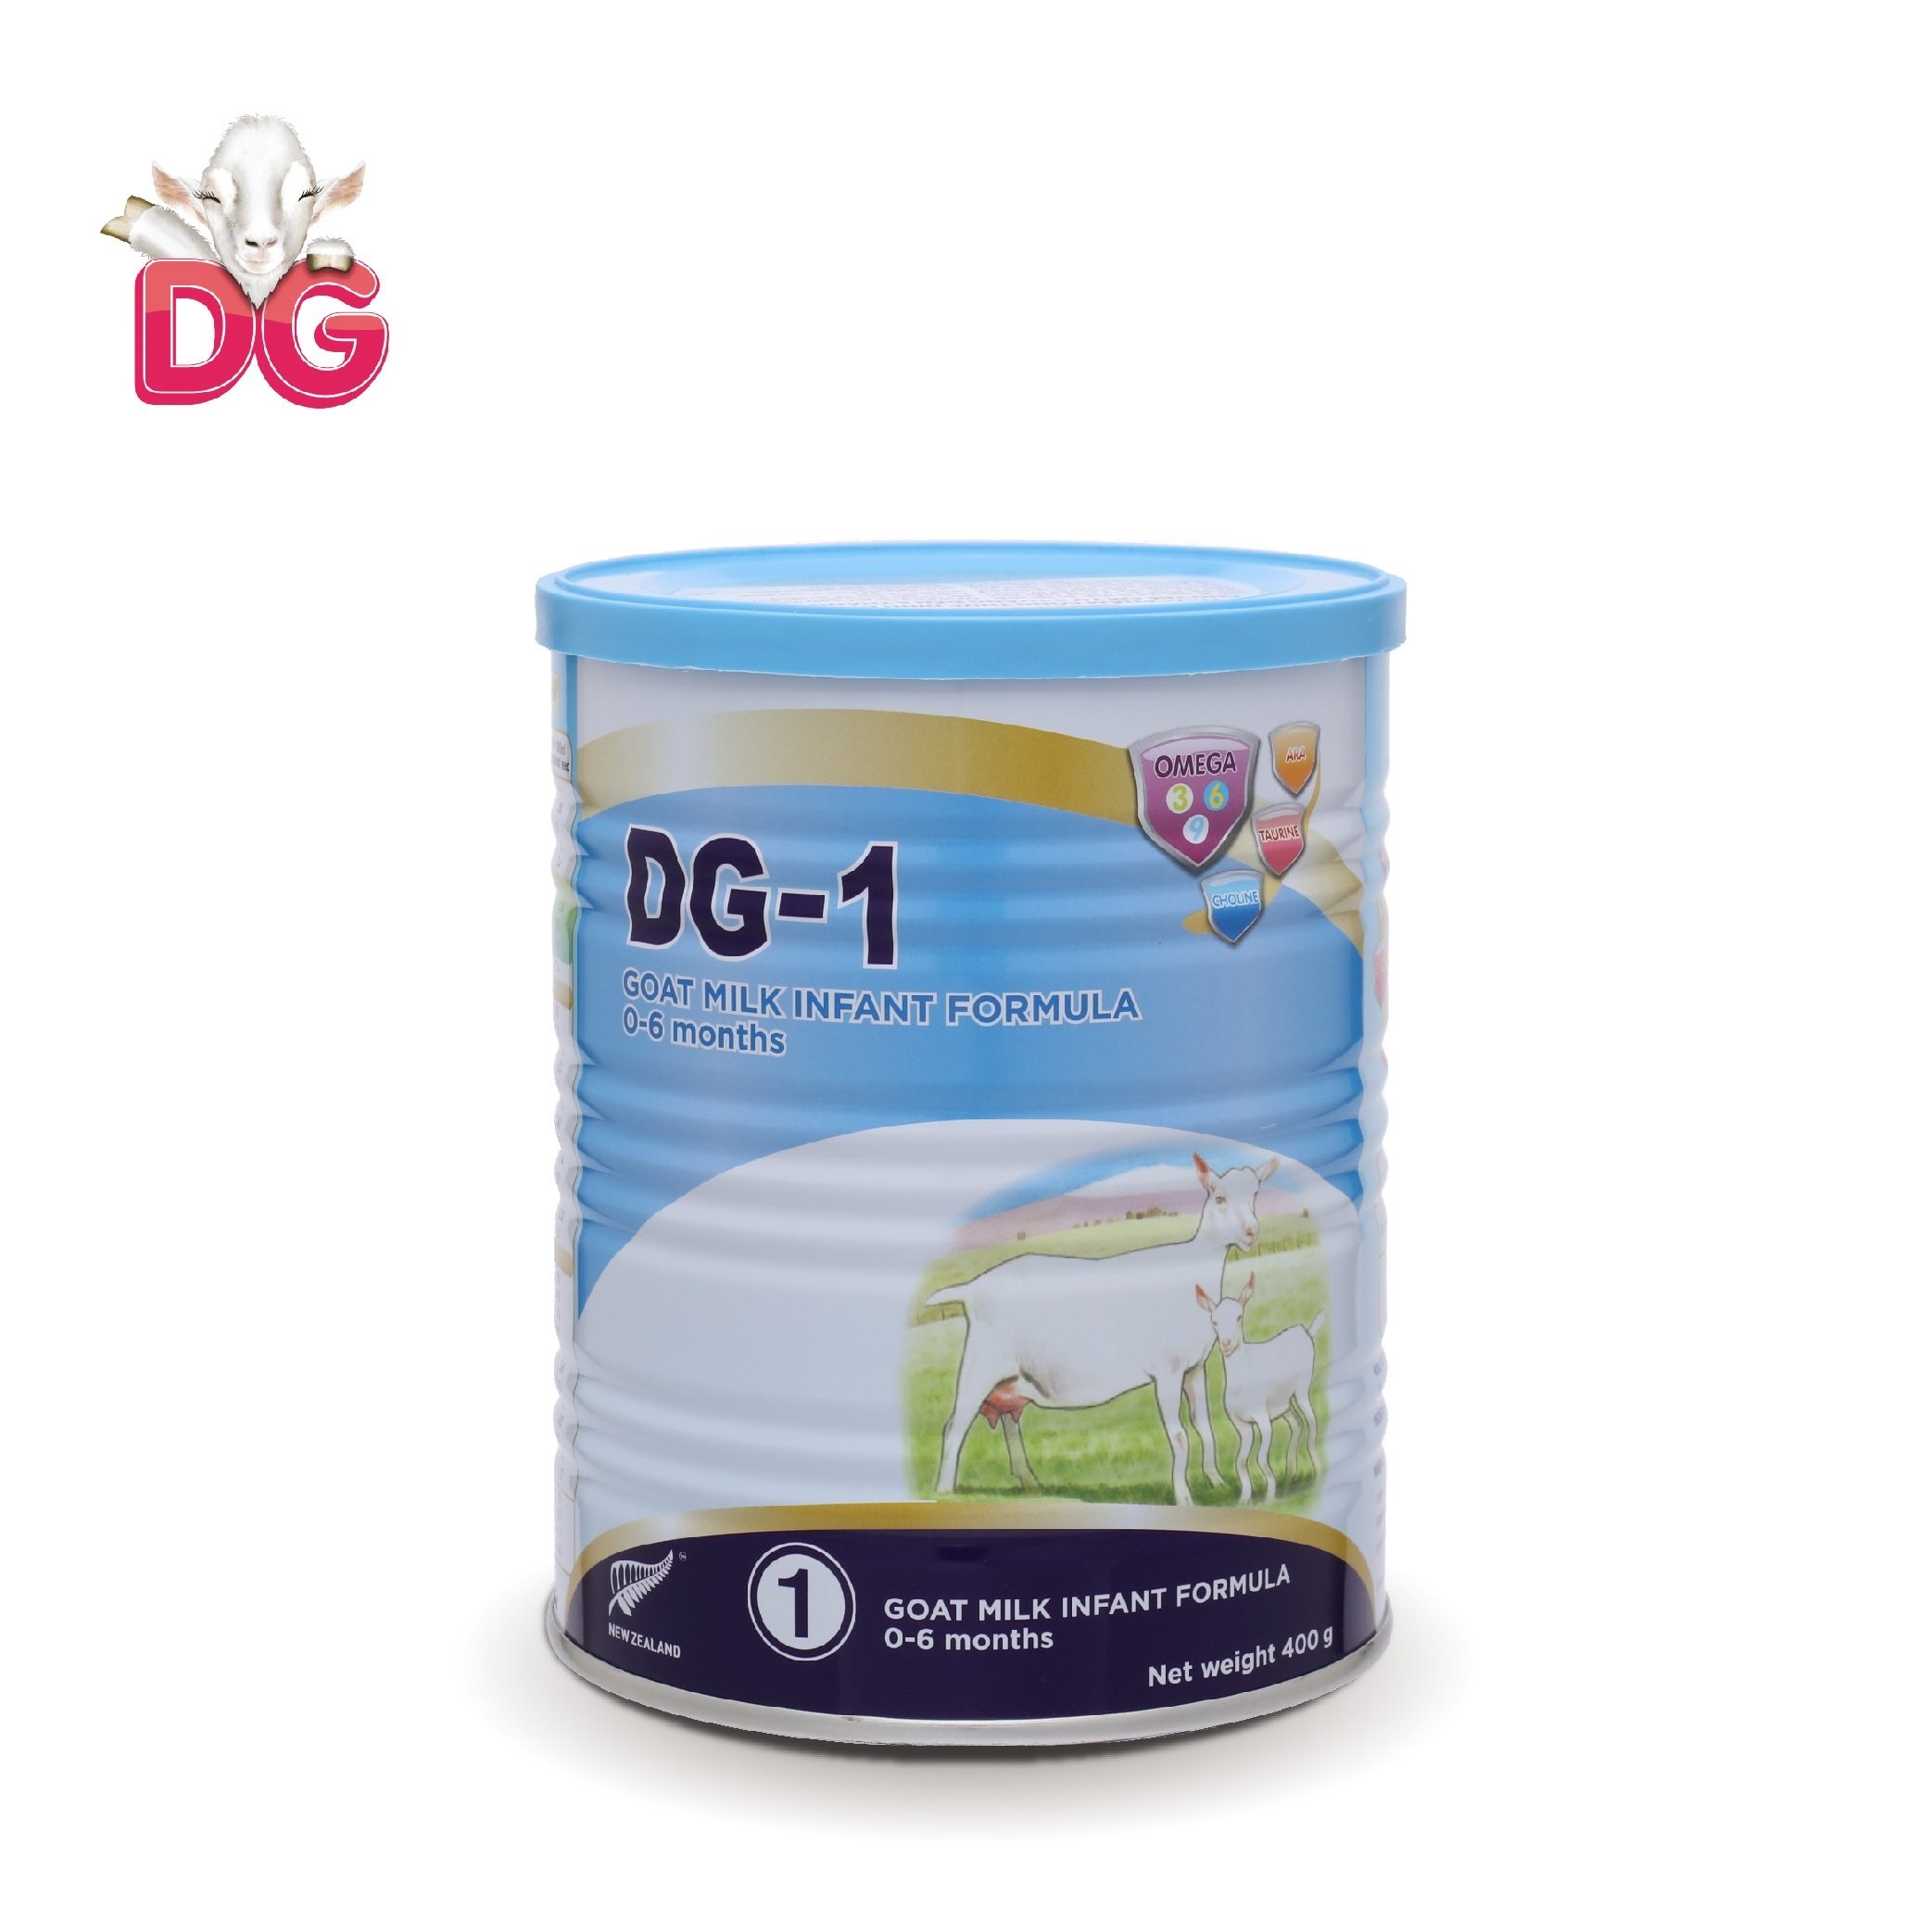 Sữa dê công thức DG-1 Goat Milk Infant Formula